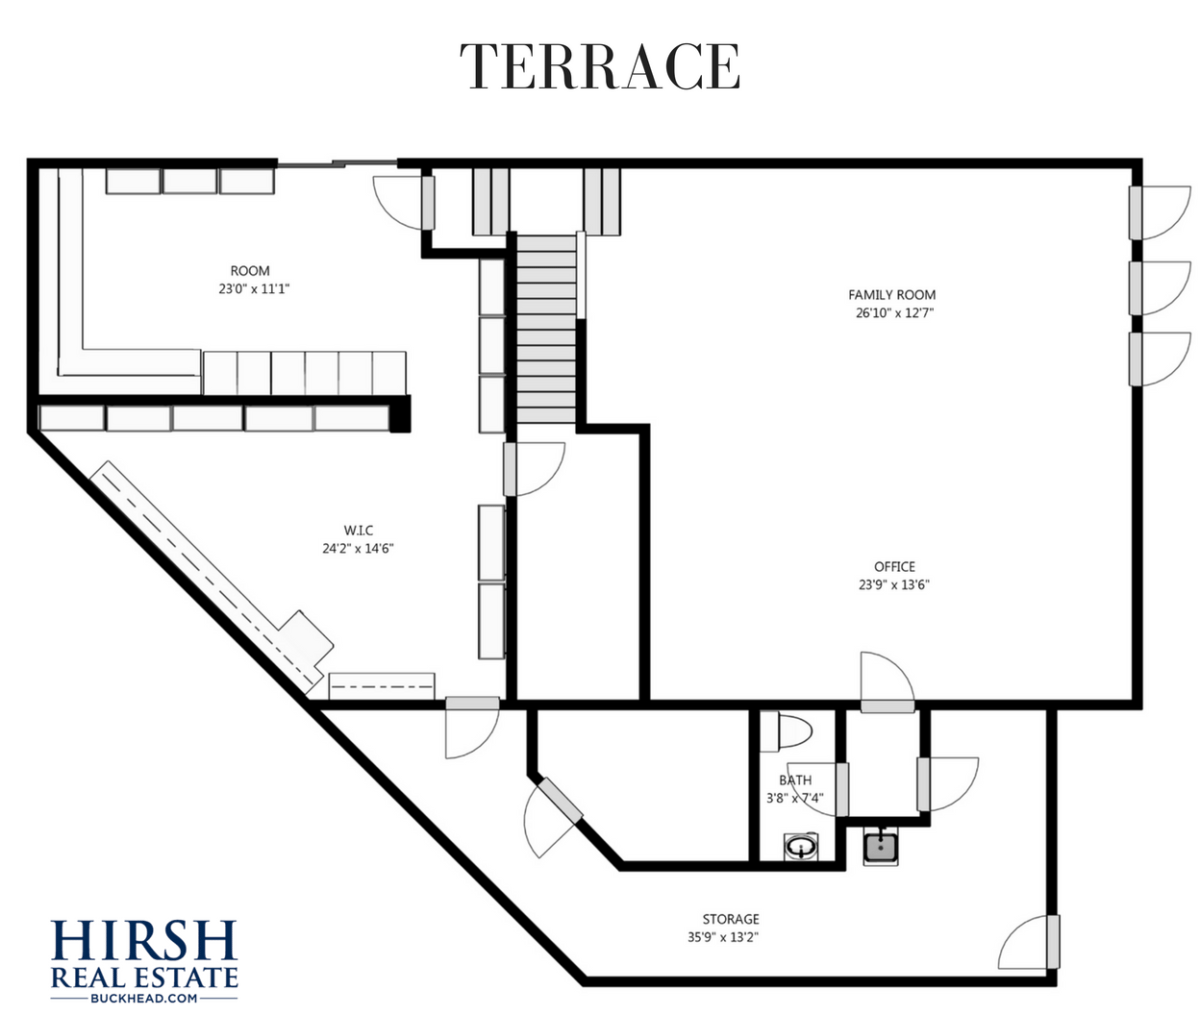 Terrace Level